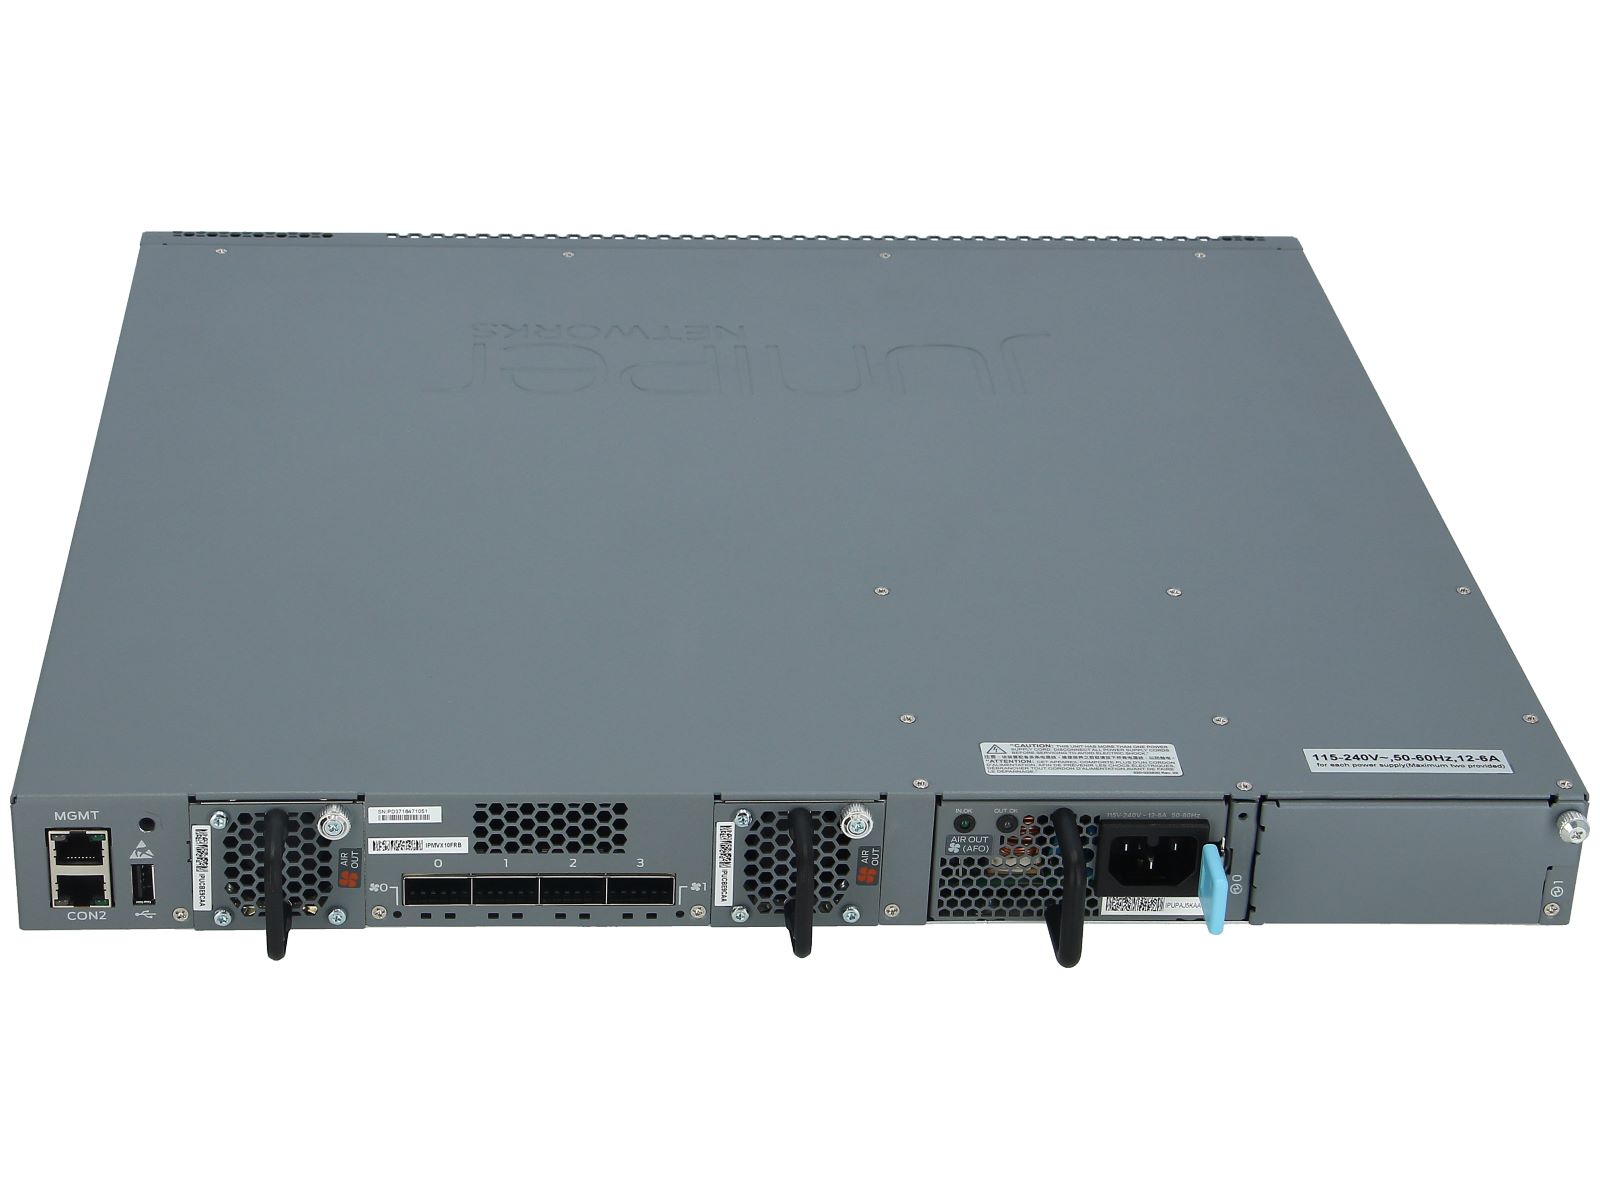 Juniper Networks EX4300-48T - 48 Port 1U Switch 10/100/1000BASE-T